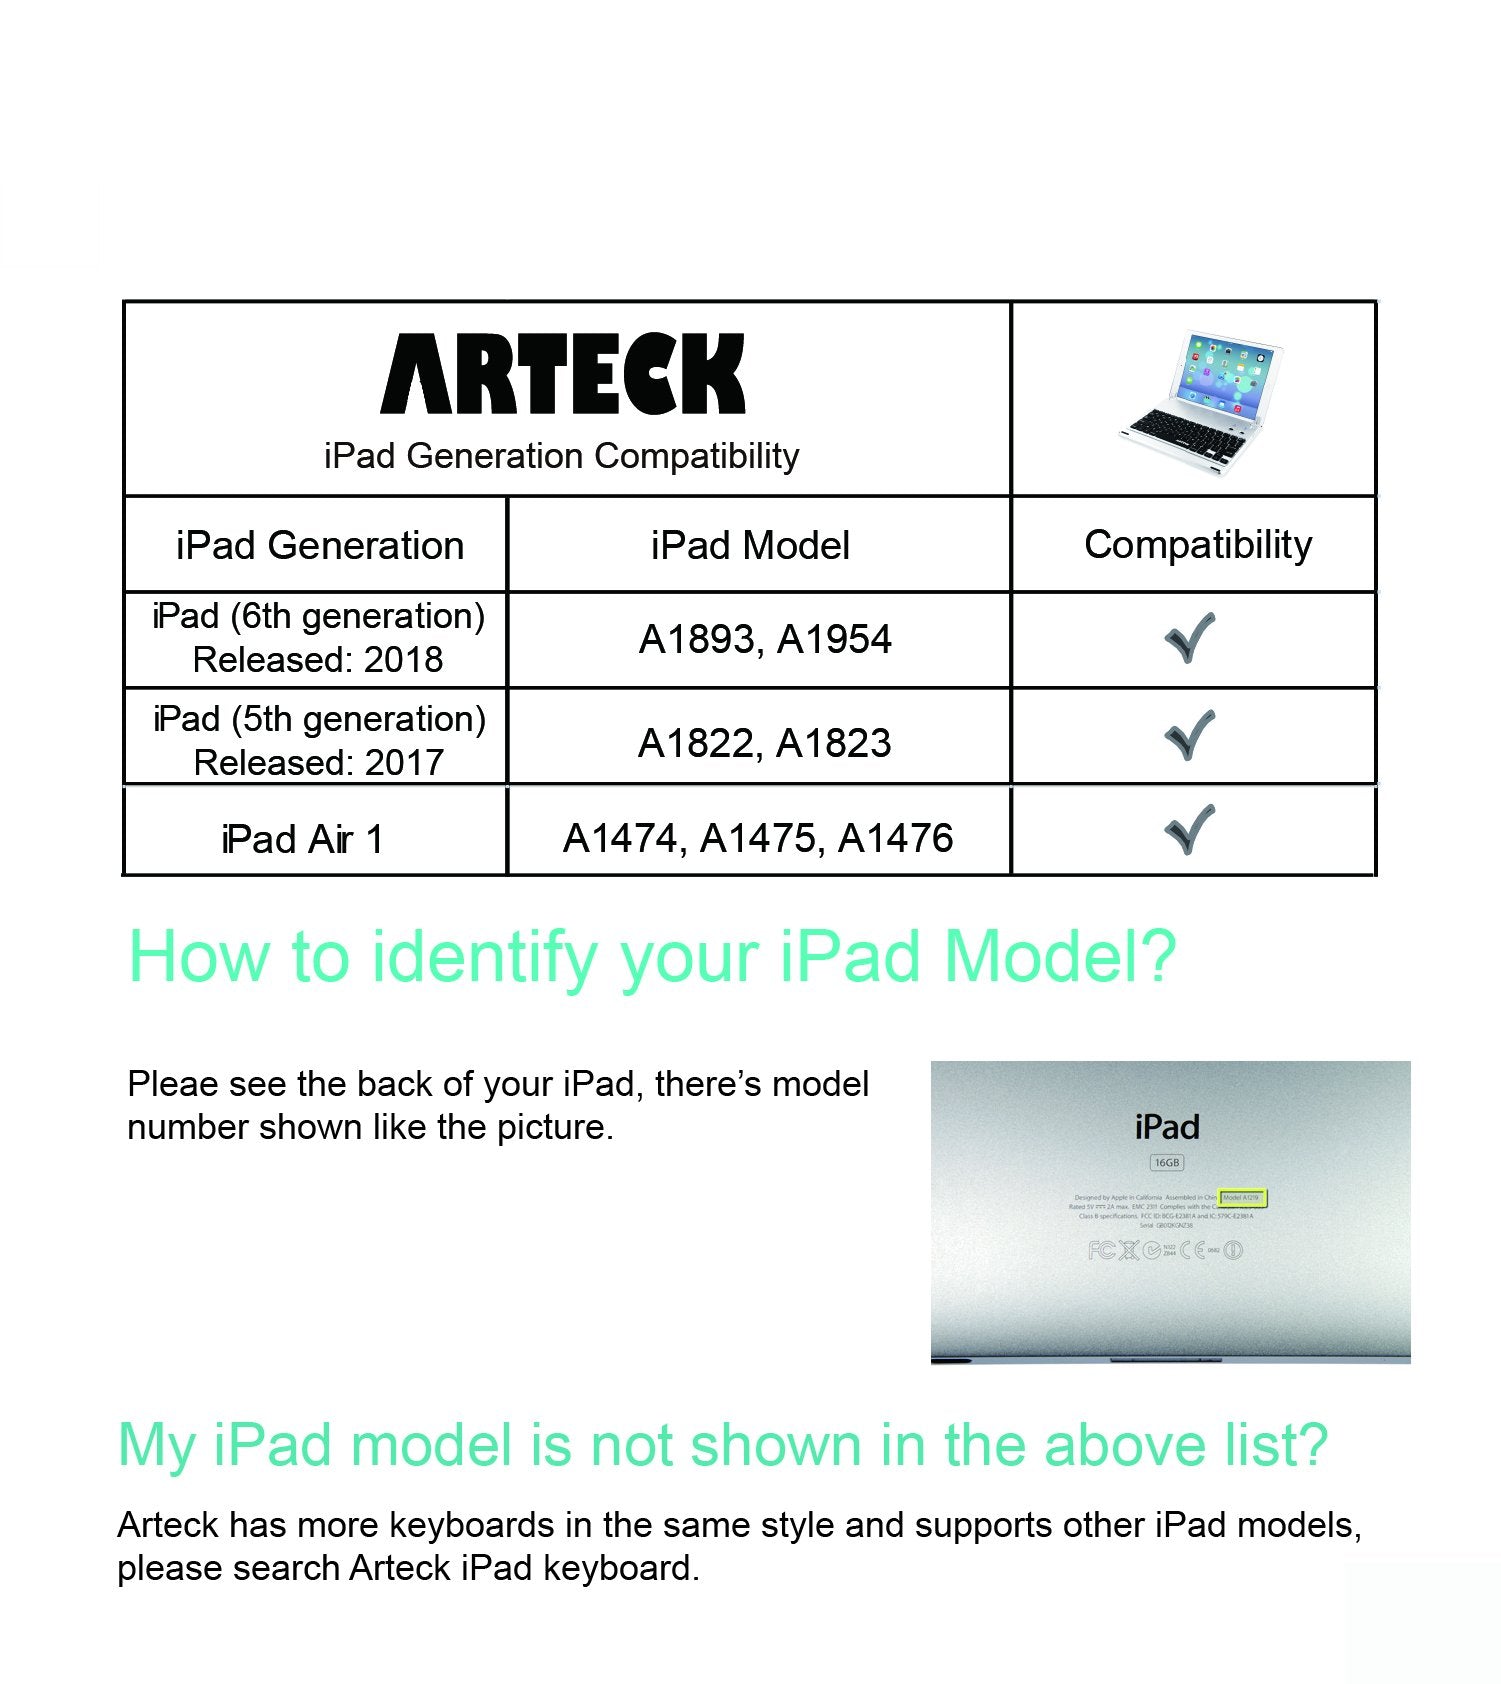 Arteck iPad 9.7-inch (iPad 6, 2018/iPad 5, 2017) Keyboard, Ultra-Thin Bluetooth Keyboard Folio Case with Stand Groove for Apple iPad 9.7 iPad 6, iPad 5 and iPad Air 1 with 130 Degree Swivel Rotating